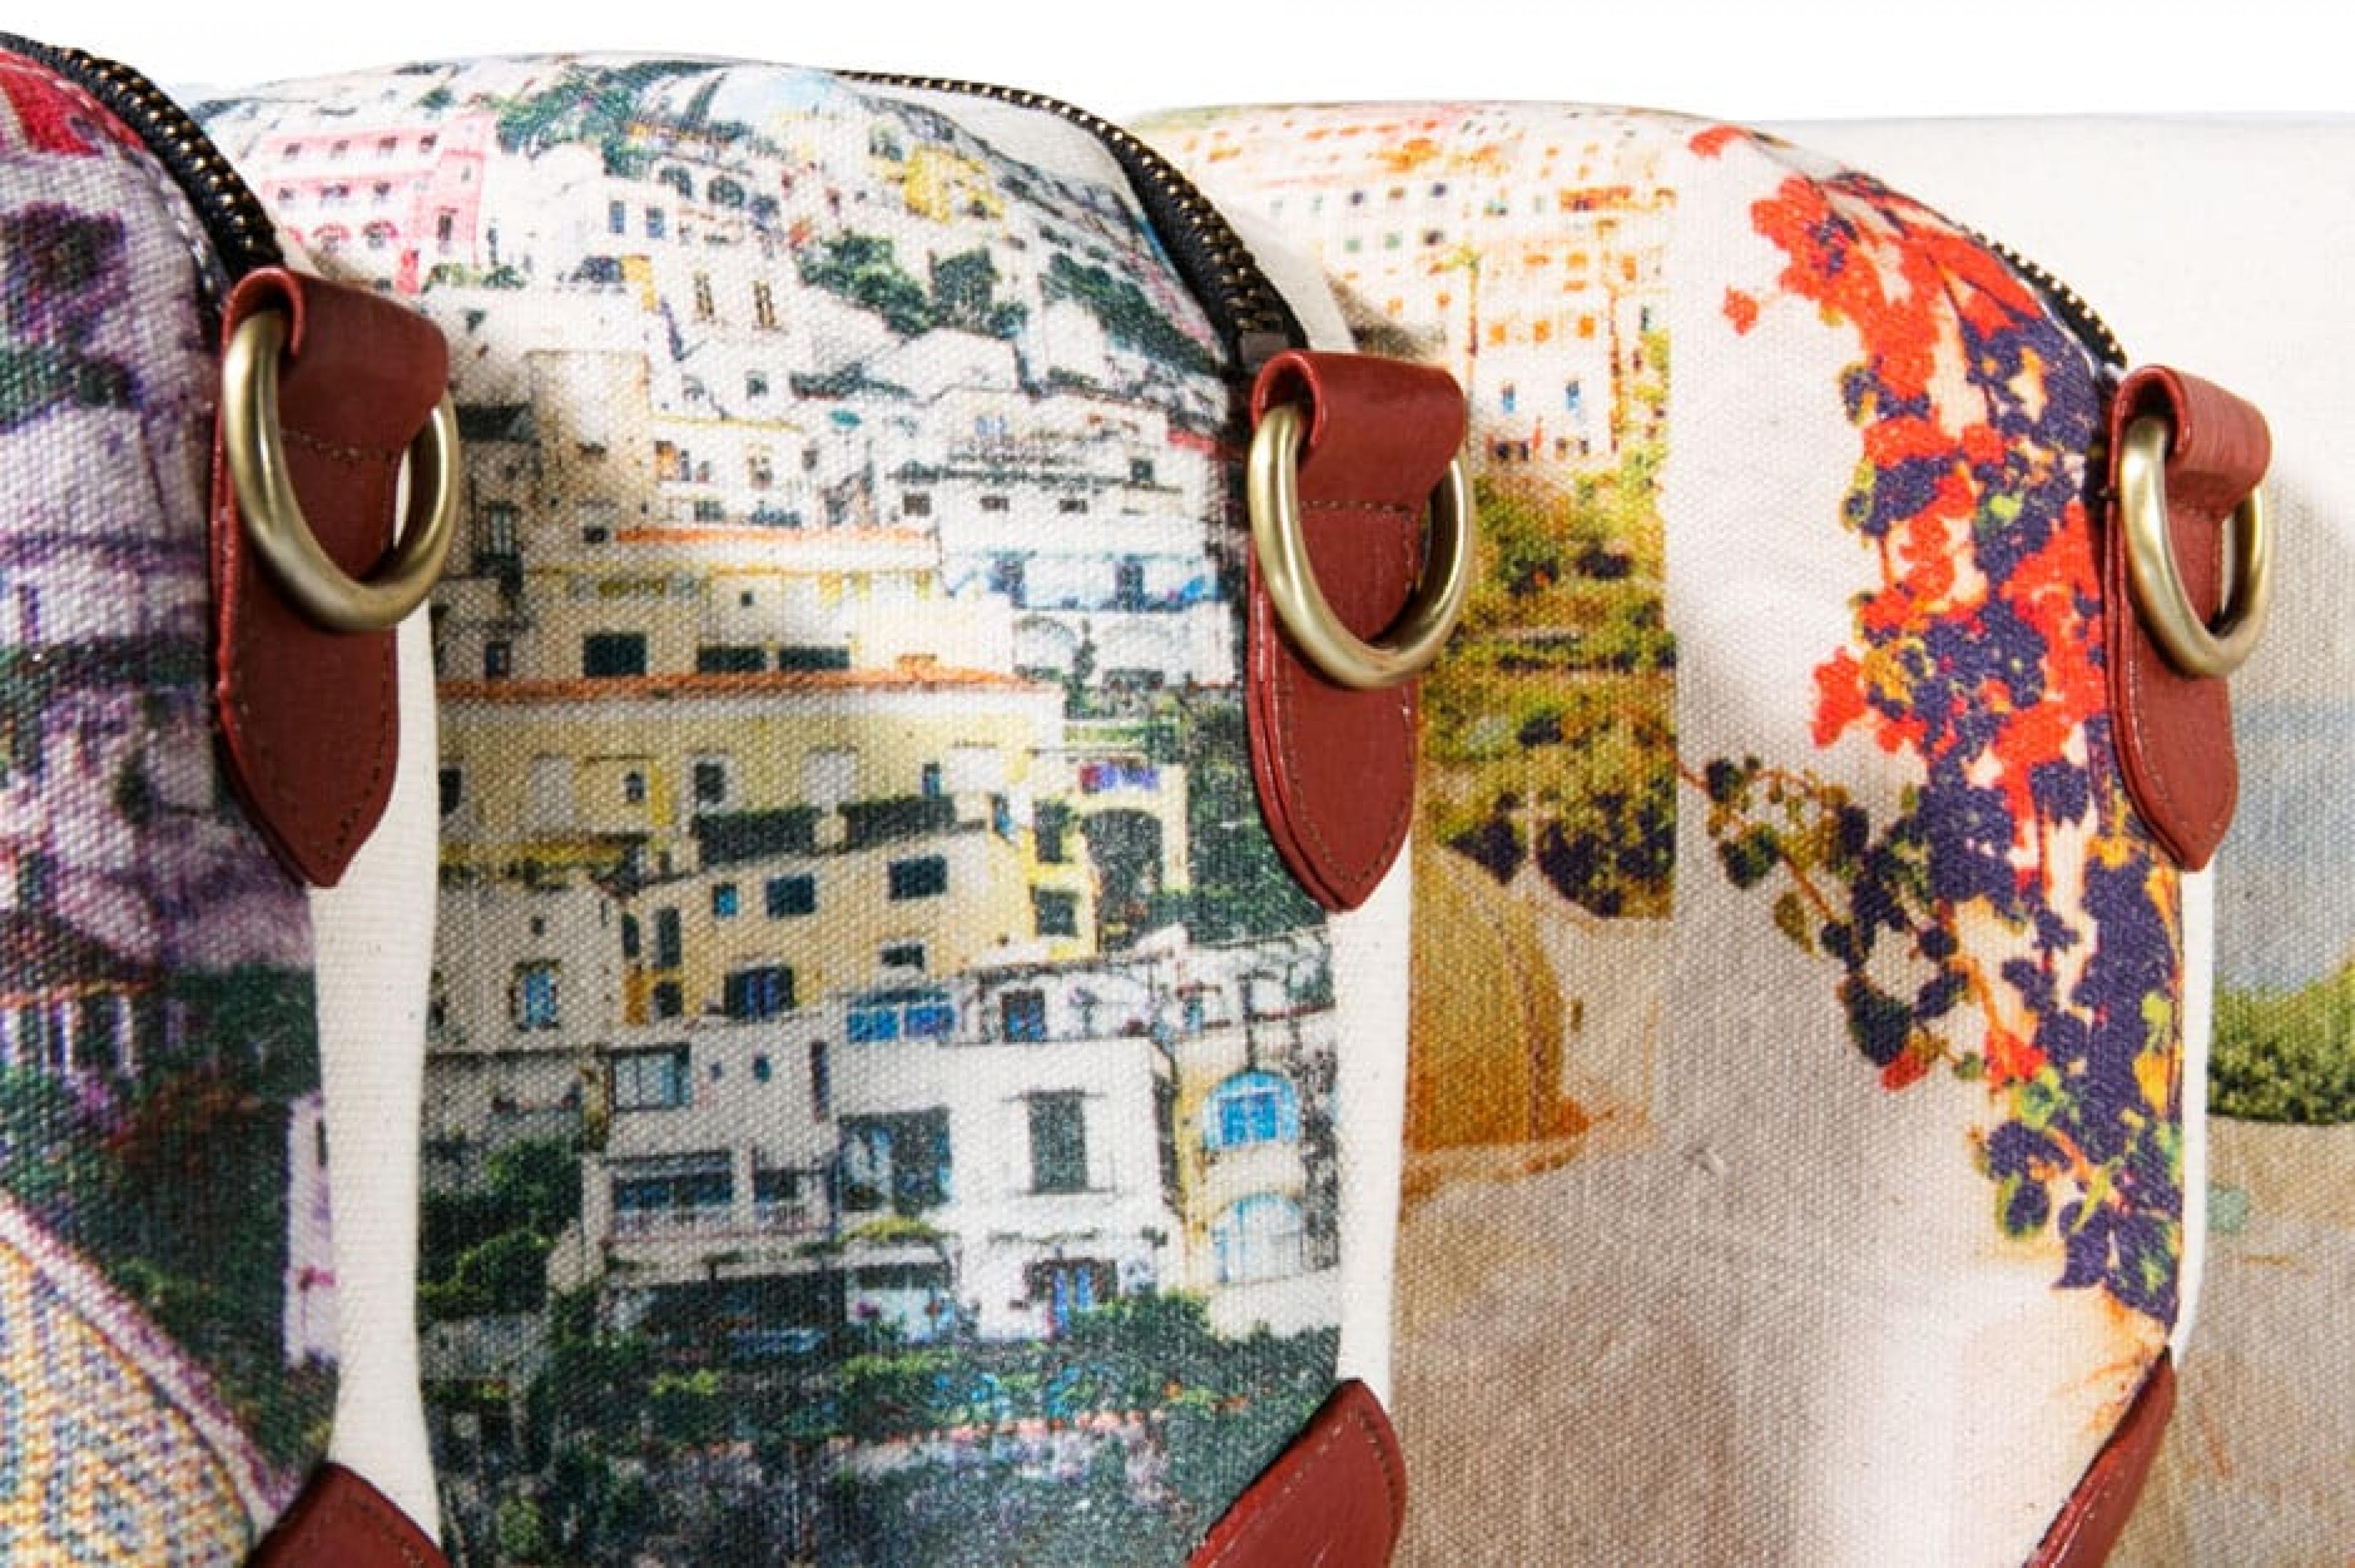 Merchandise at Emporio Sirenuse , Amalfi Coast, Italy - Courtesy of Le Sirenuse